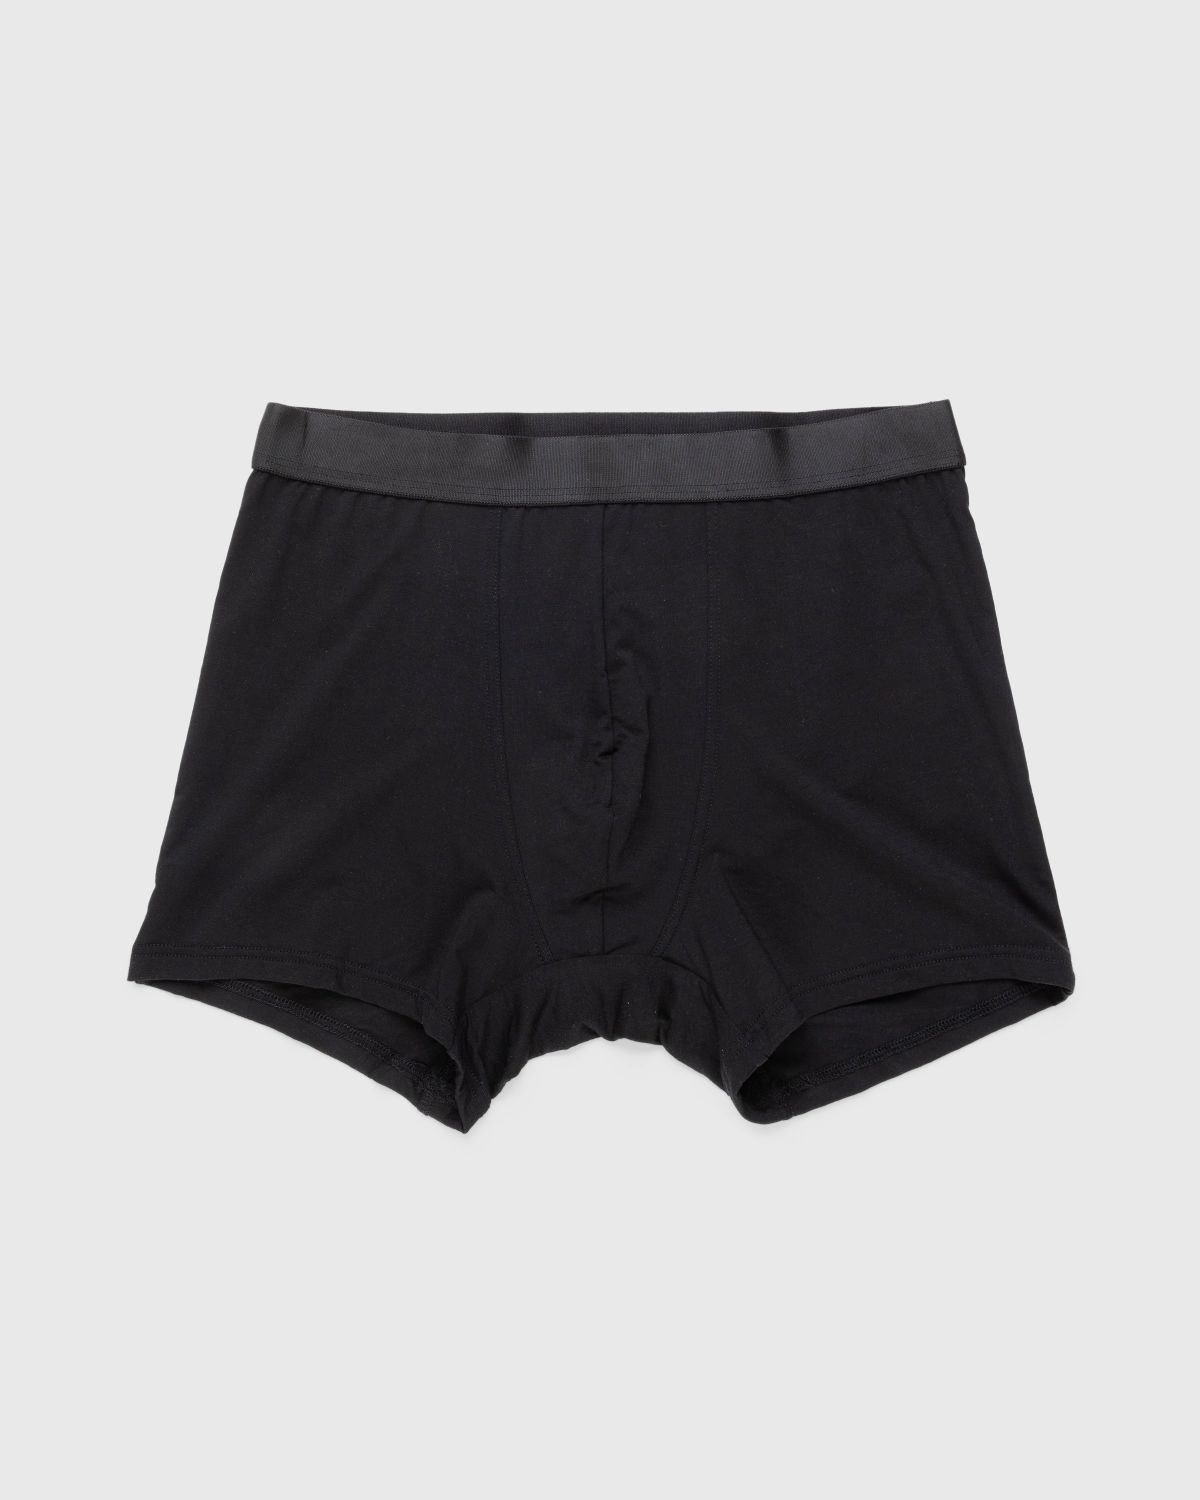 CDLP – Boxer Briefs Black - Underwear - Black - Image 1